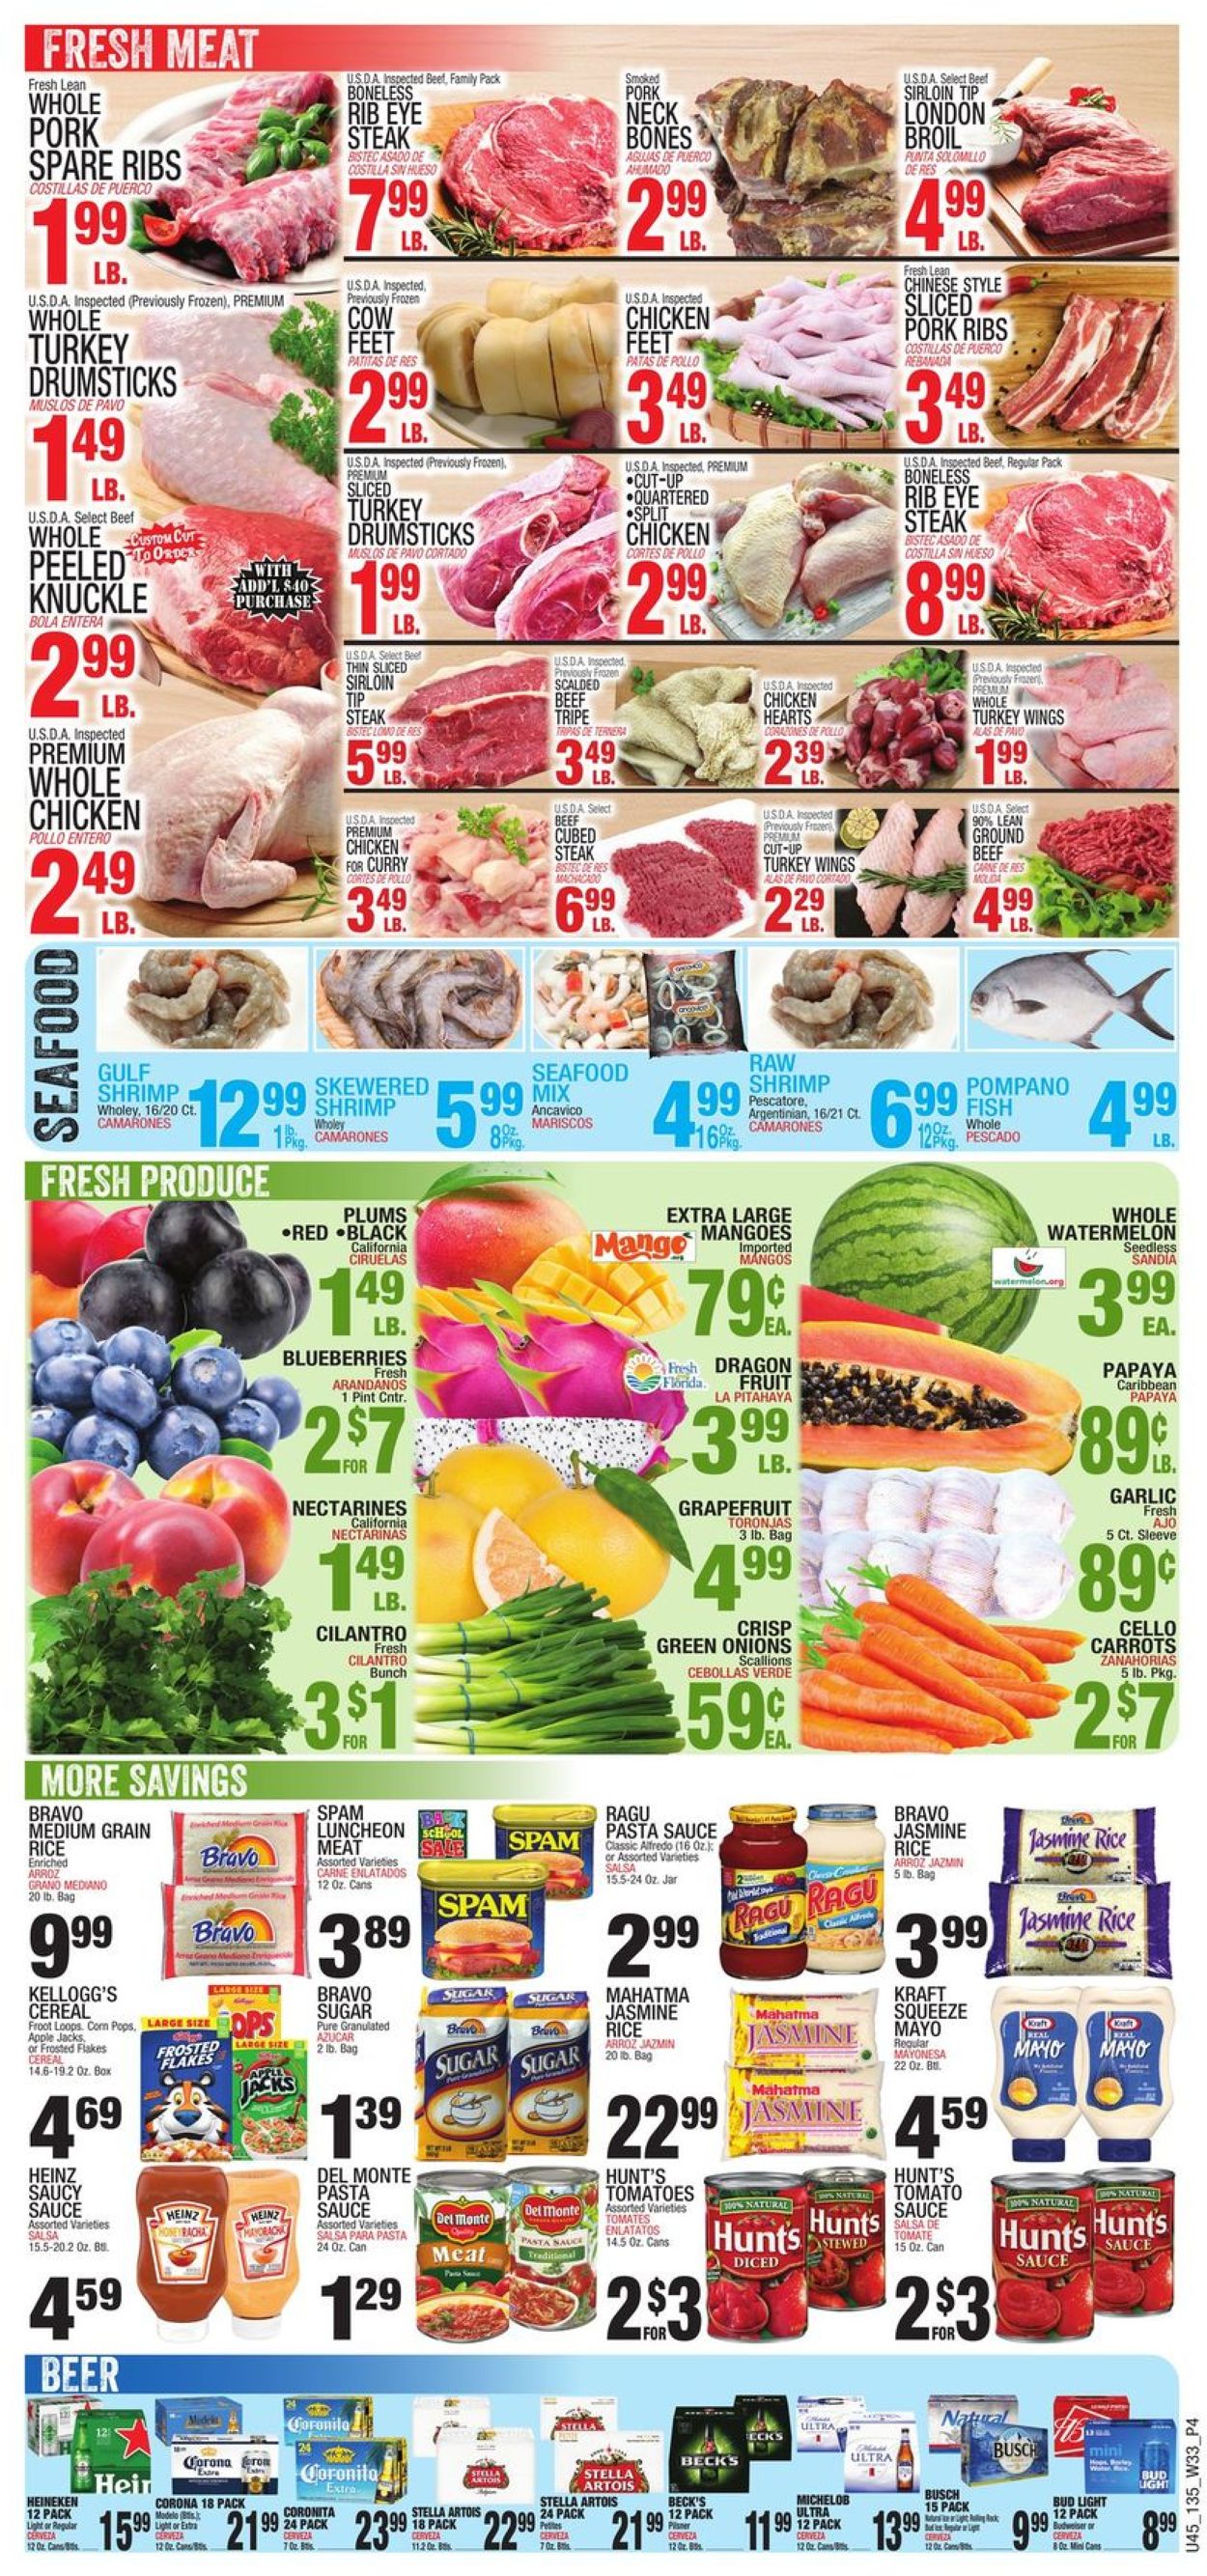 Bravo Supermarkets Ad from 08/11/2022